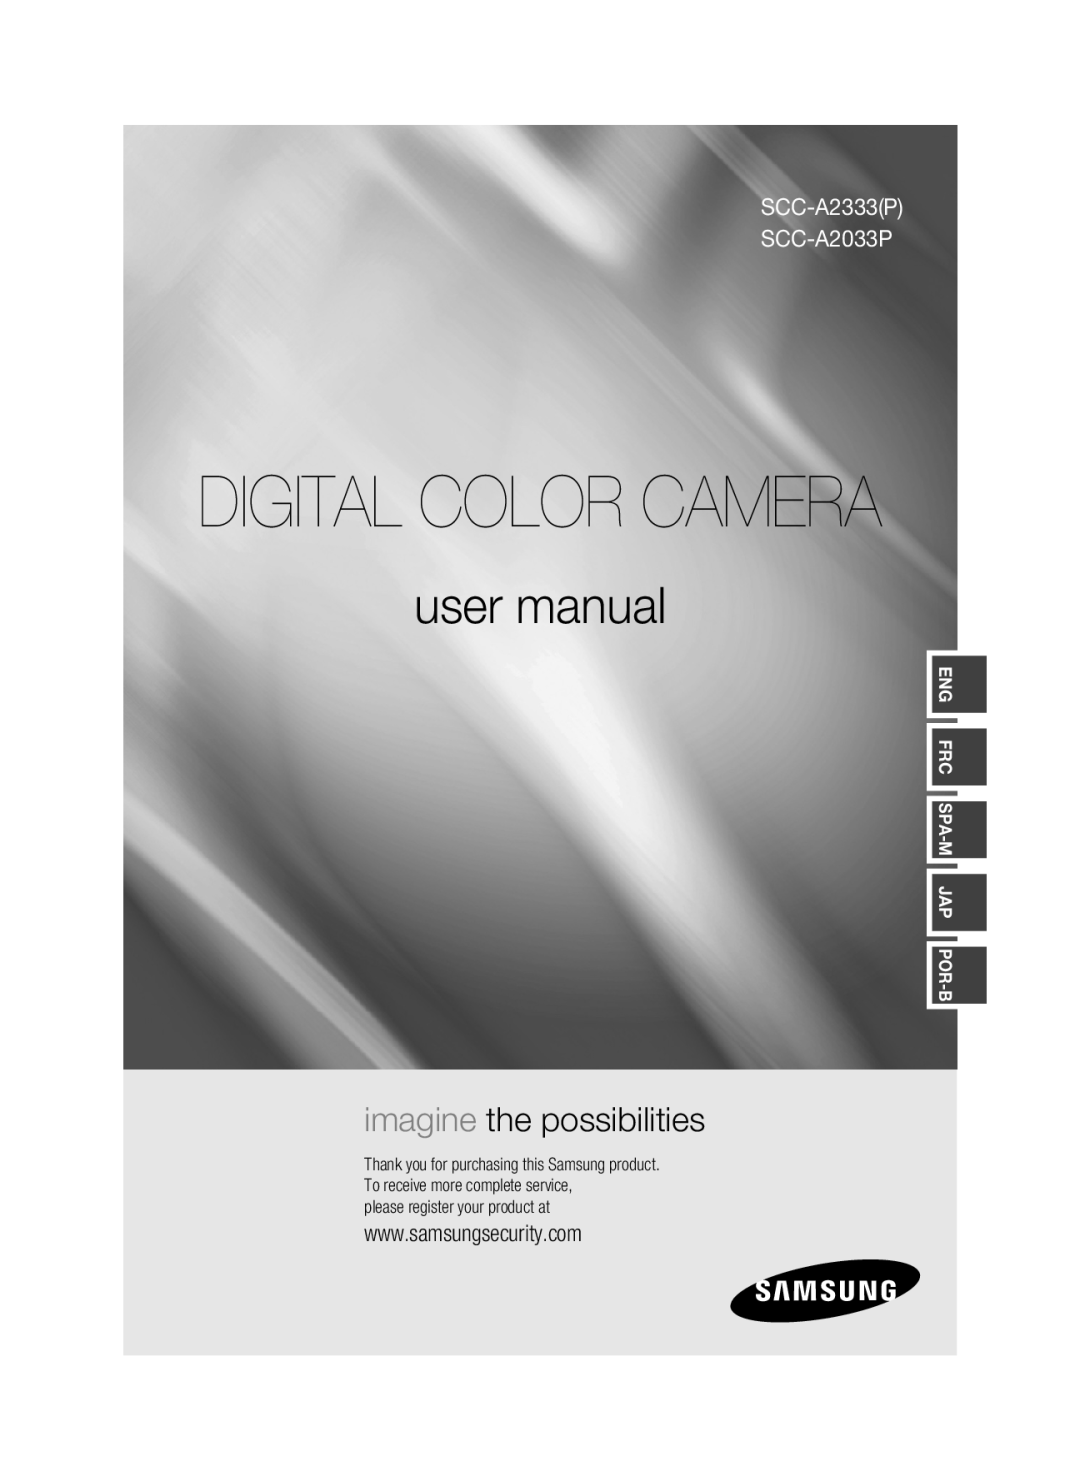 Samsung manual Digital Color Camera, user manual, imagine the possibilities, SCC-A2333P SCC-A2033P, Spa-M, Por-B 